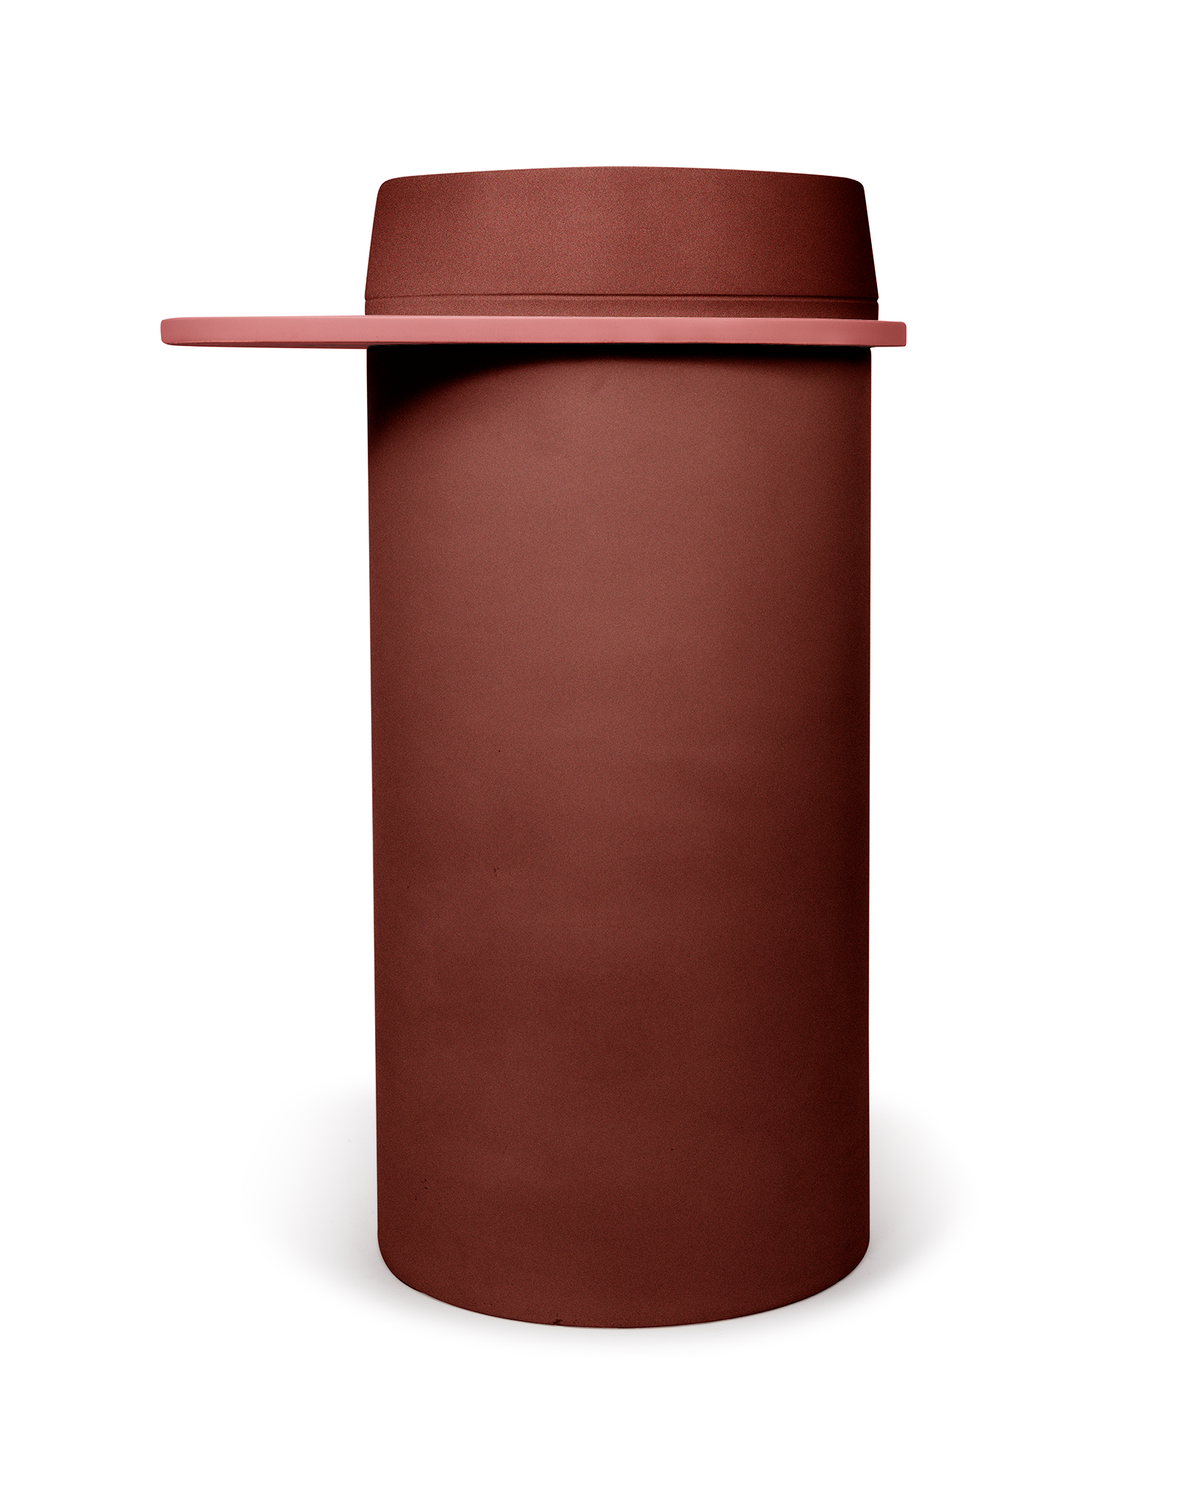 Cylinder - Funl Basin (Clay)